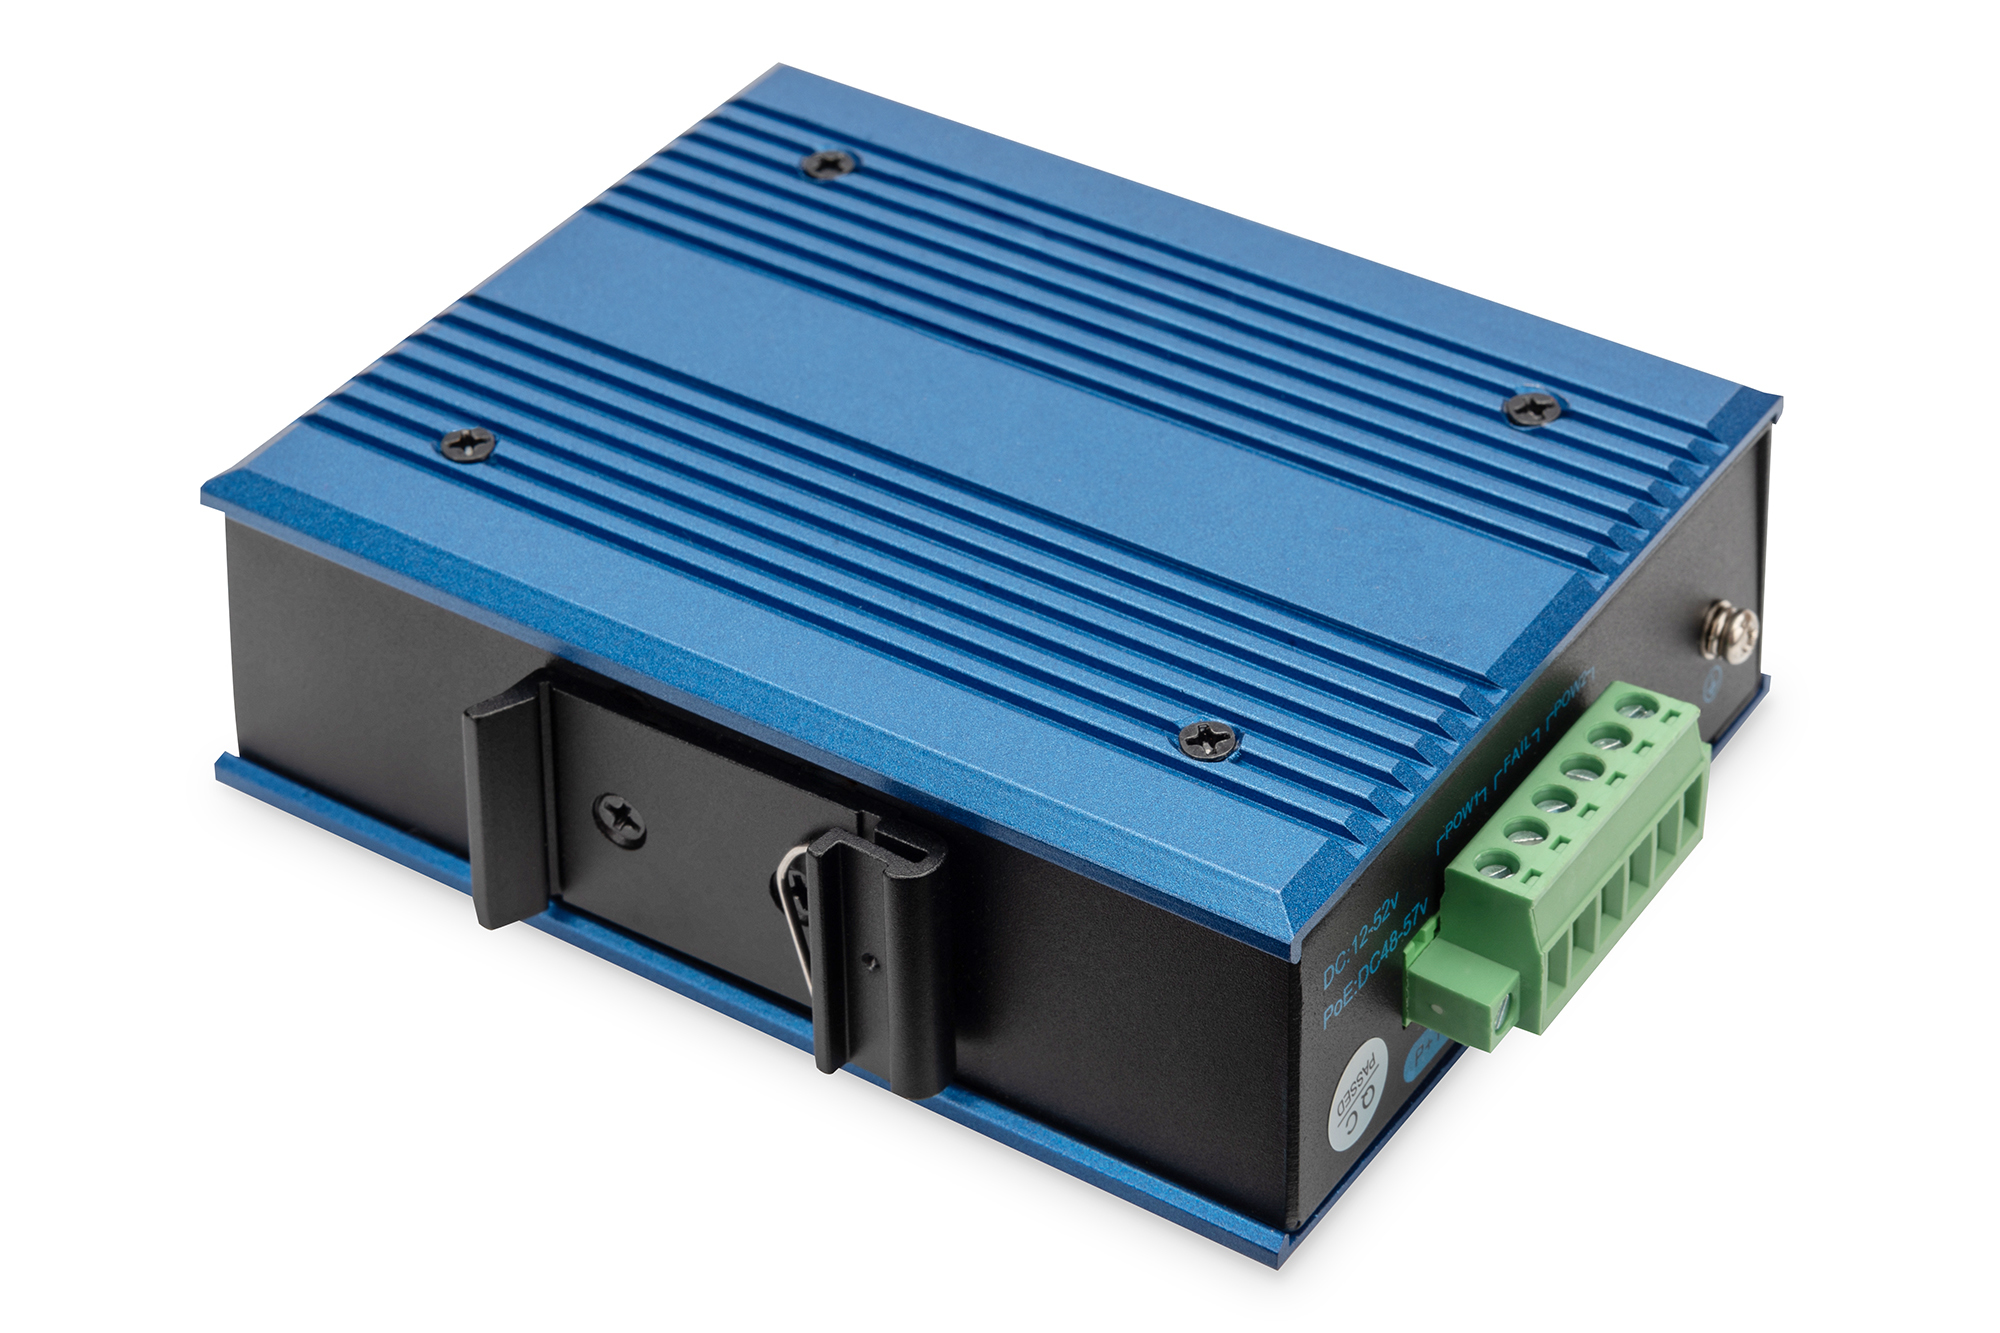 DIGITUS 4 Port Fast Ethernet Netzwerk PoE Switch, Industrial, Unmanaged, 1 SFP Uplink